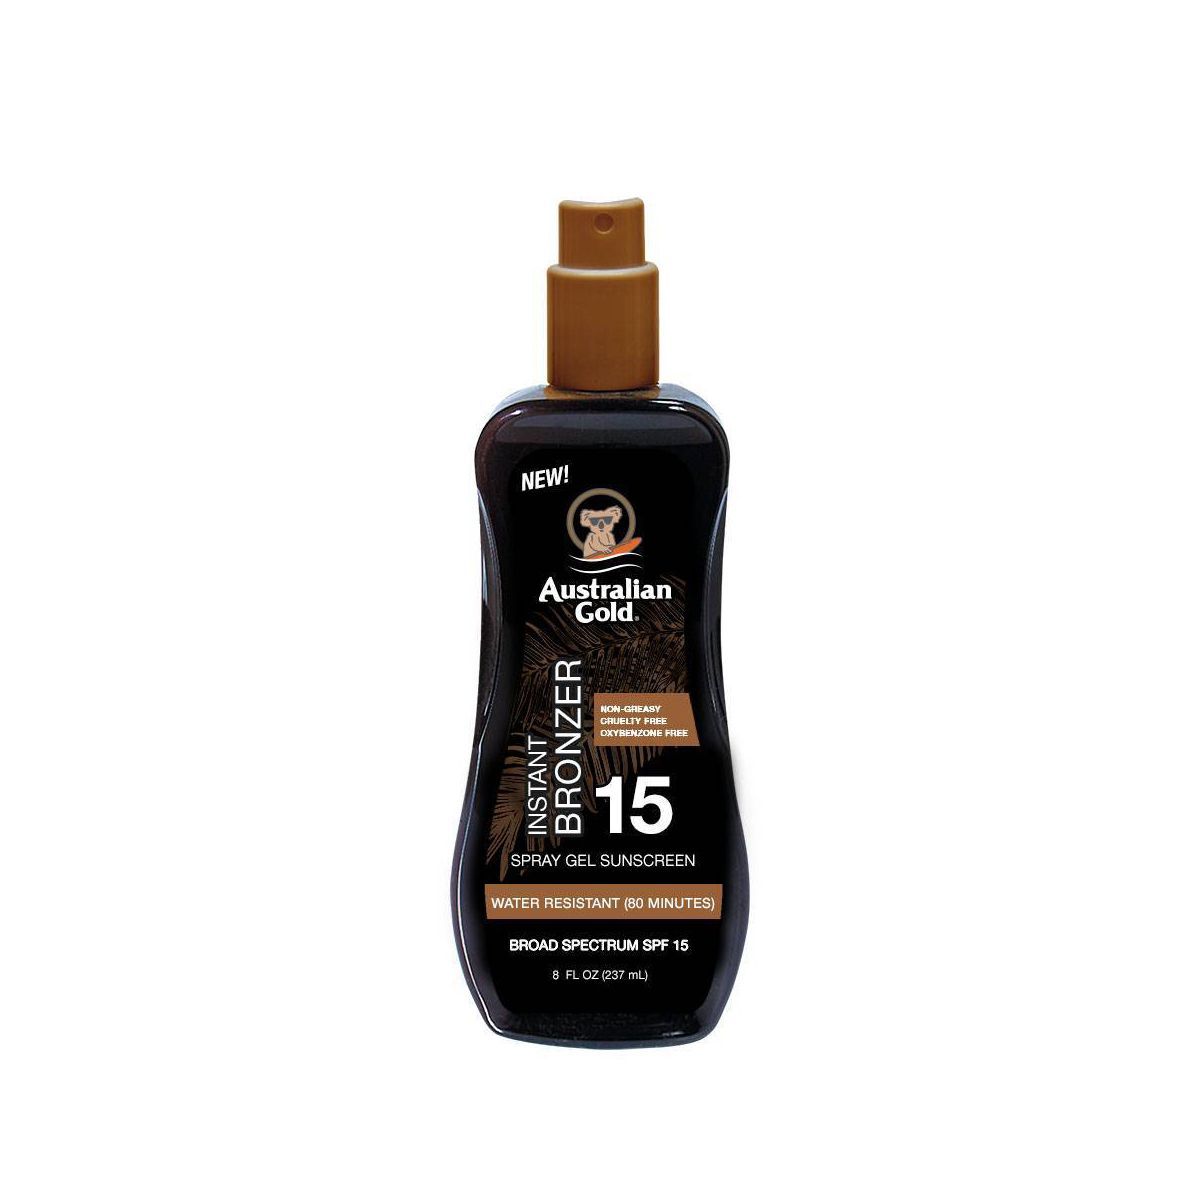 Australian Gold Sunscreen Spray Gel with Instant Bronzer - 8 fl oz | Target